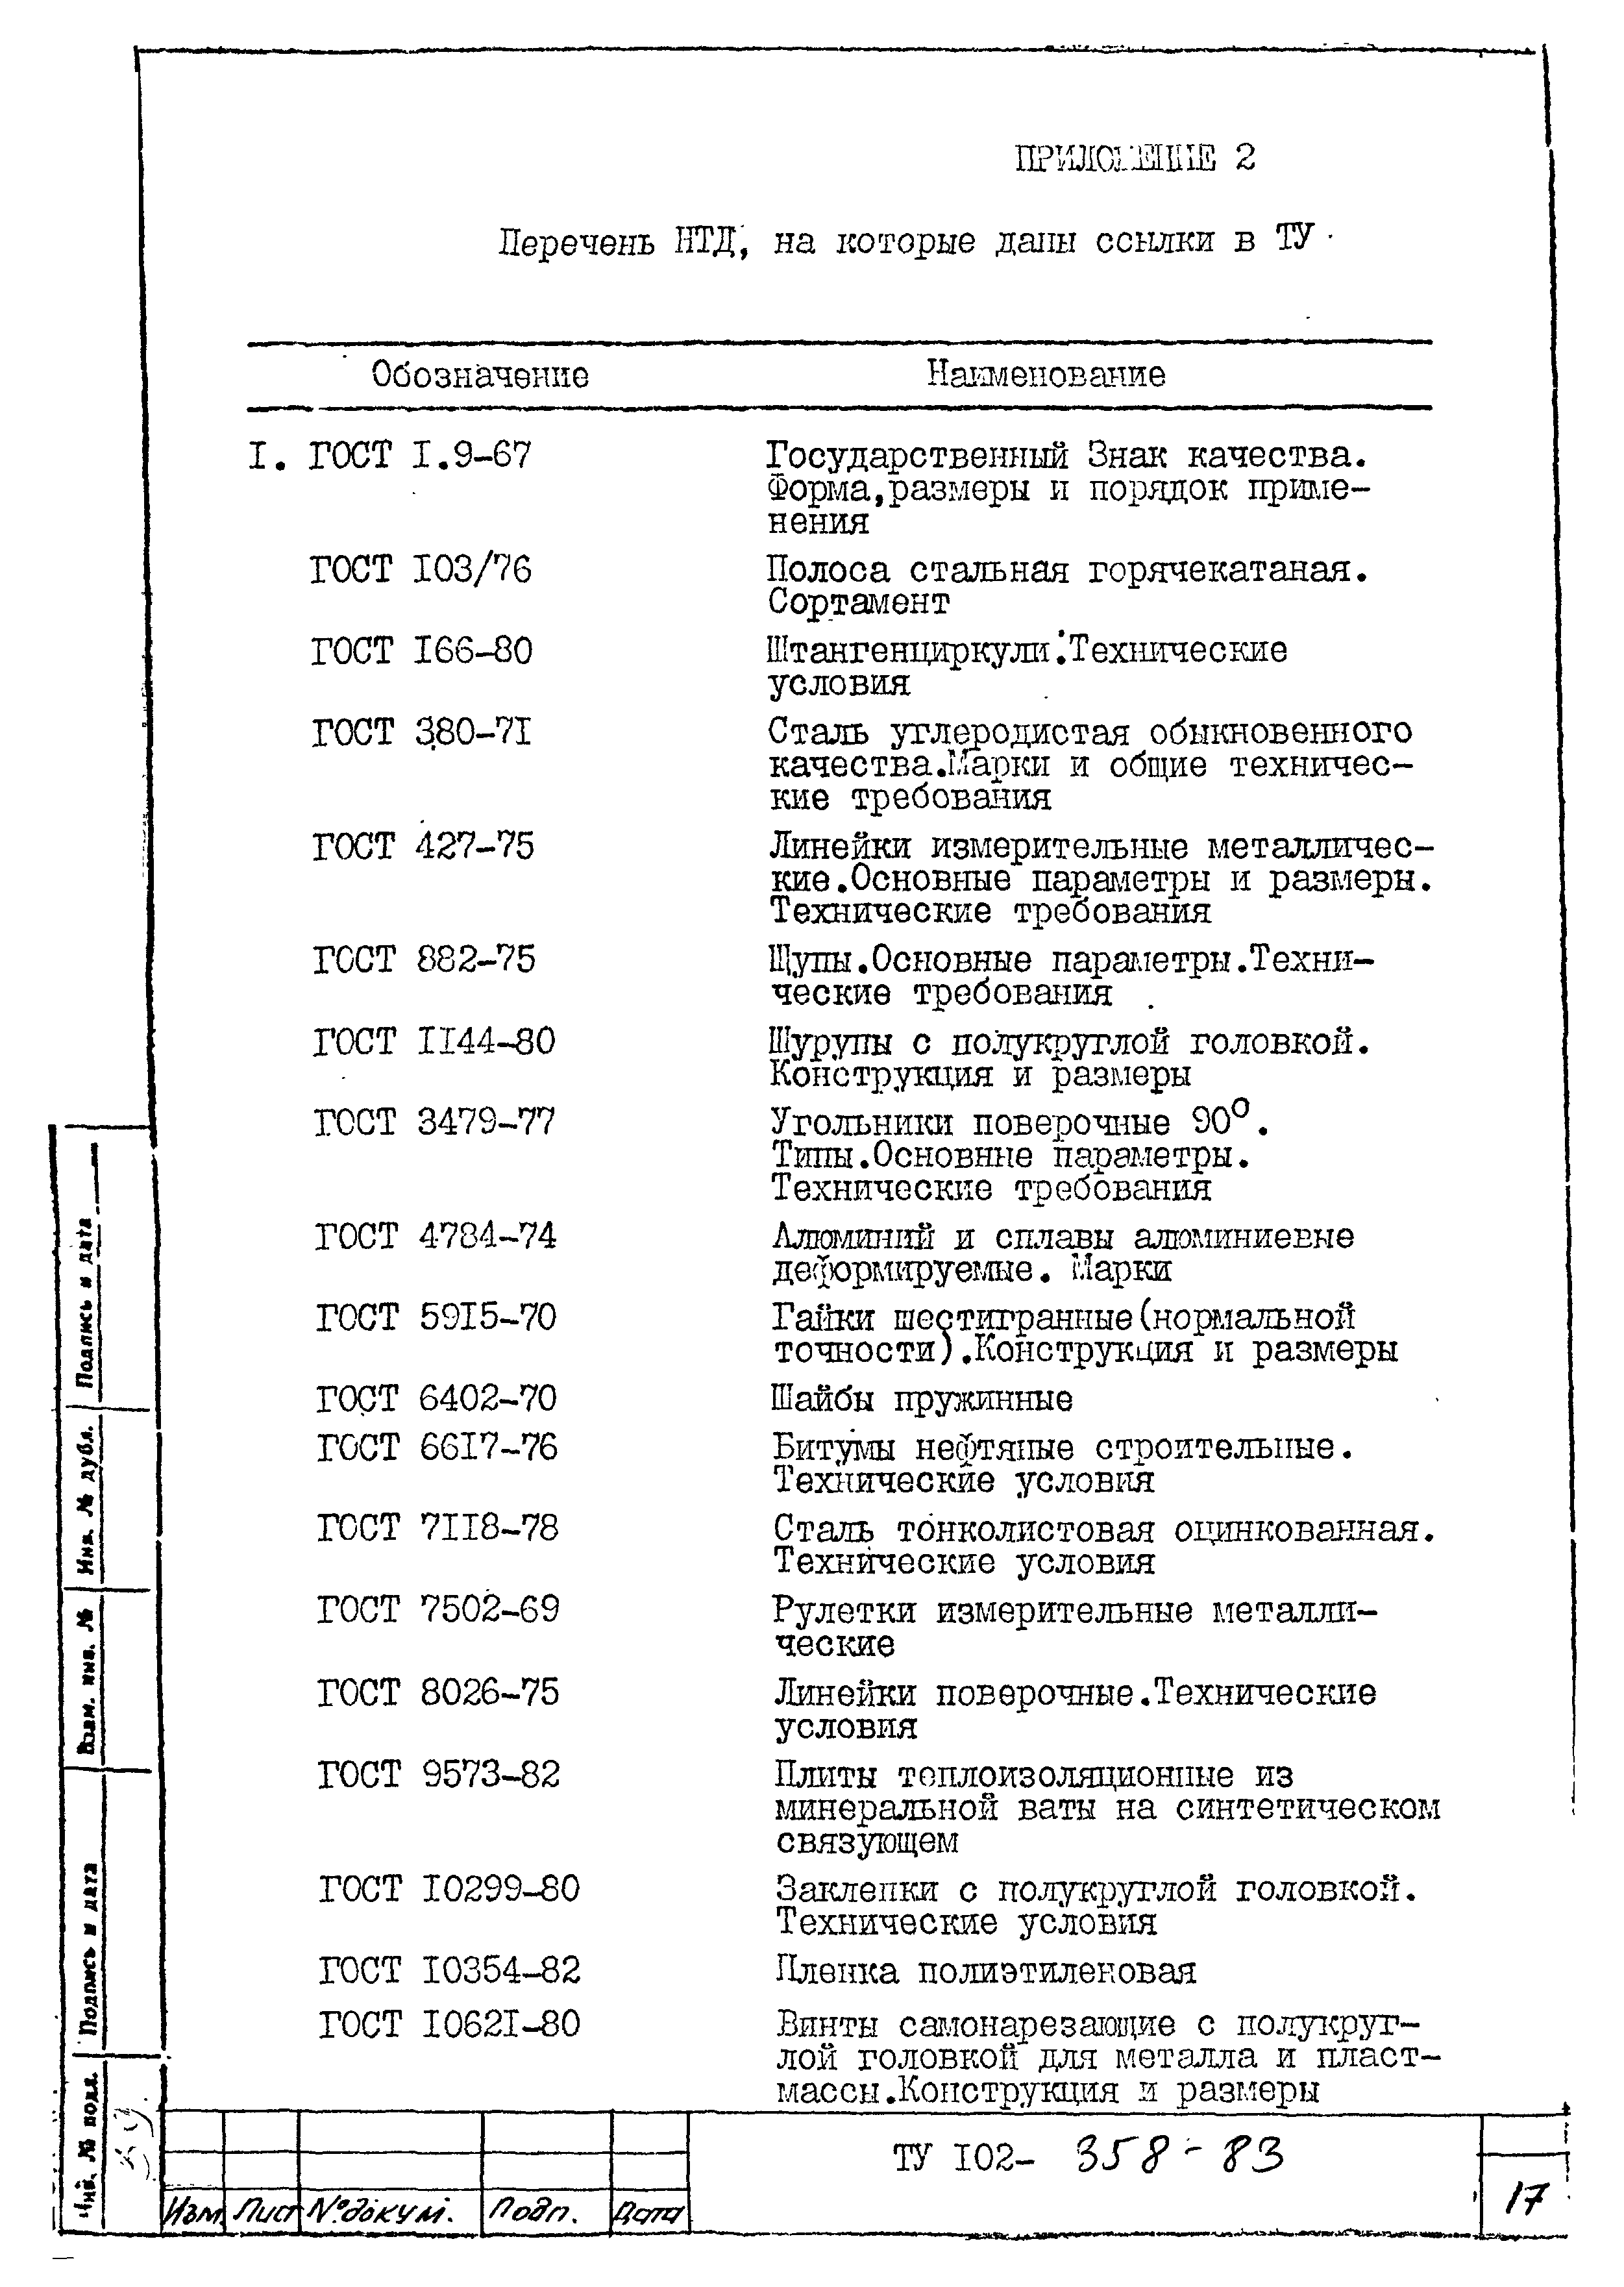 ТУ 102-358-83